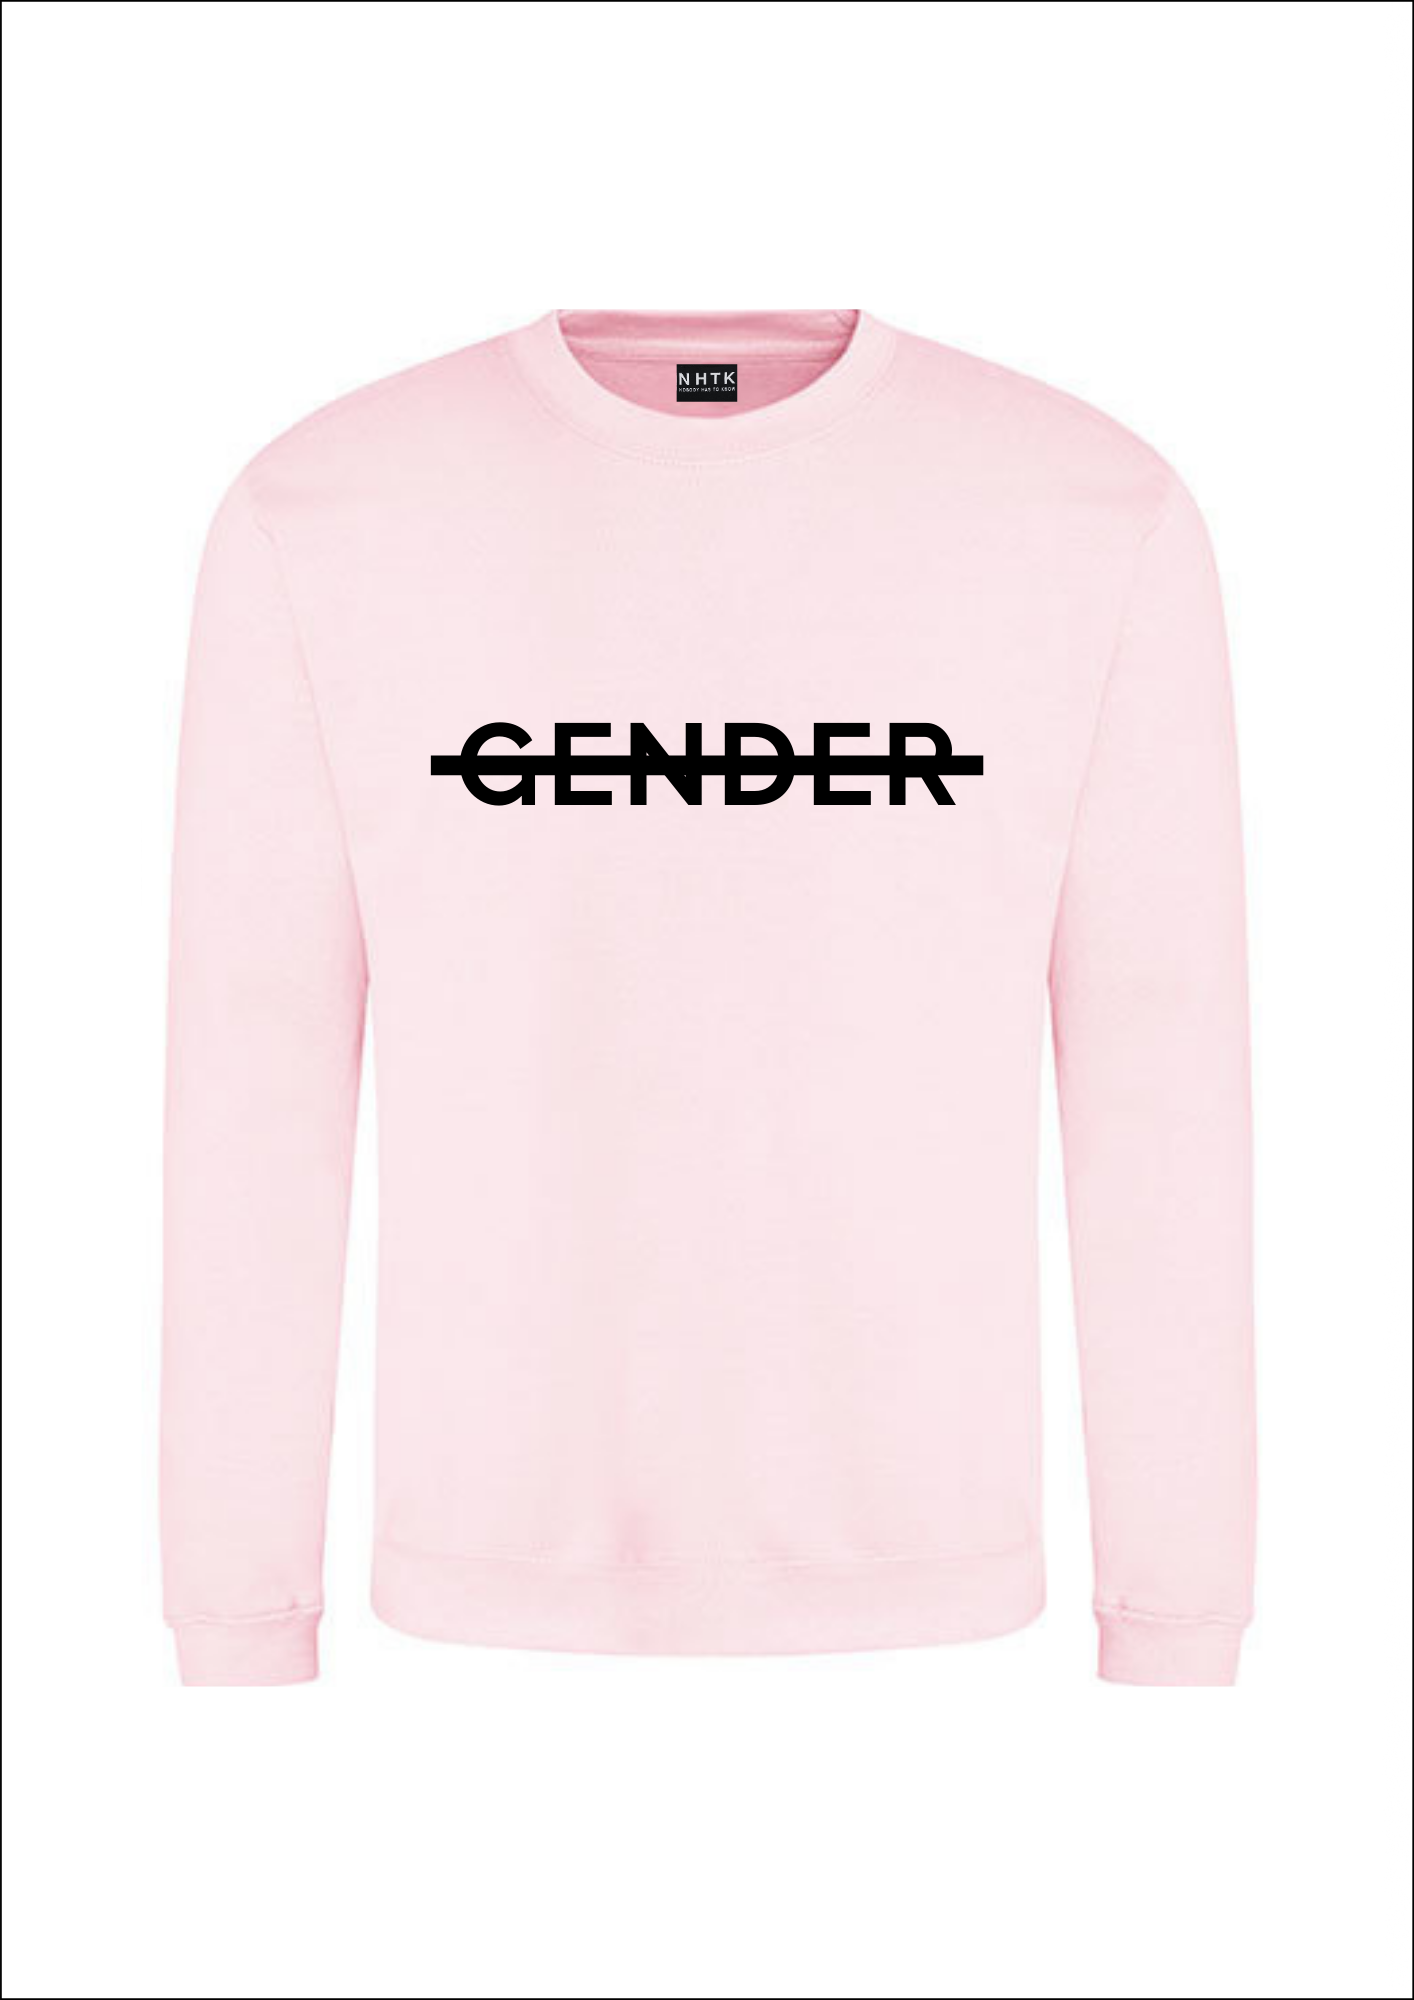 No gender sweater - light blue